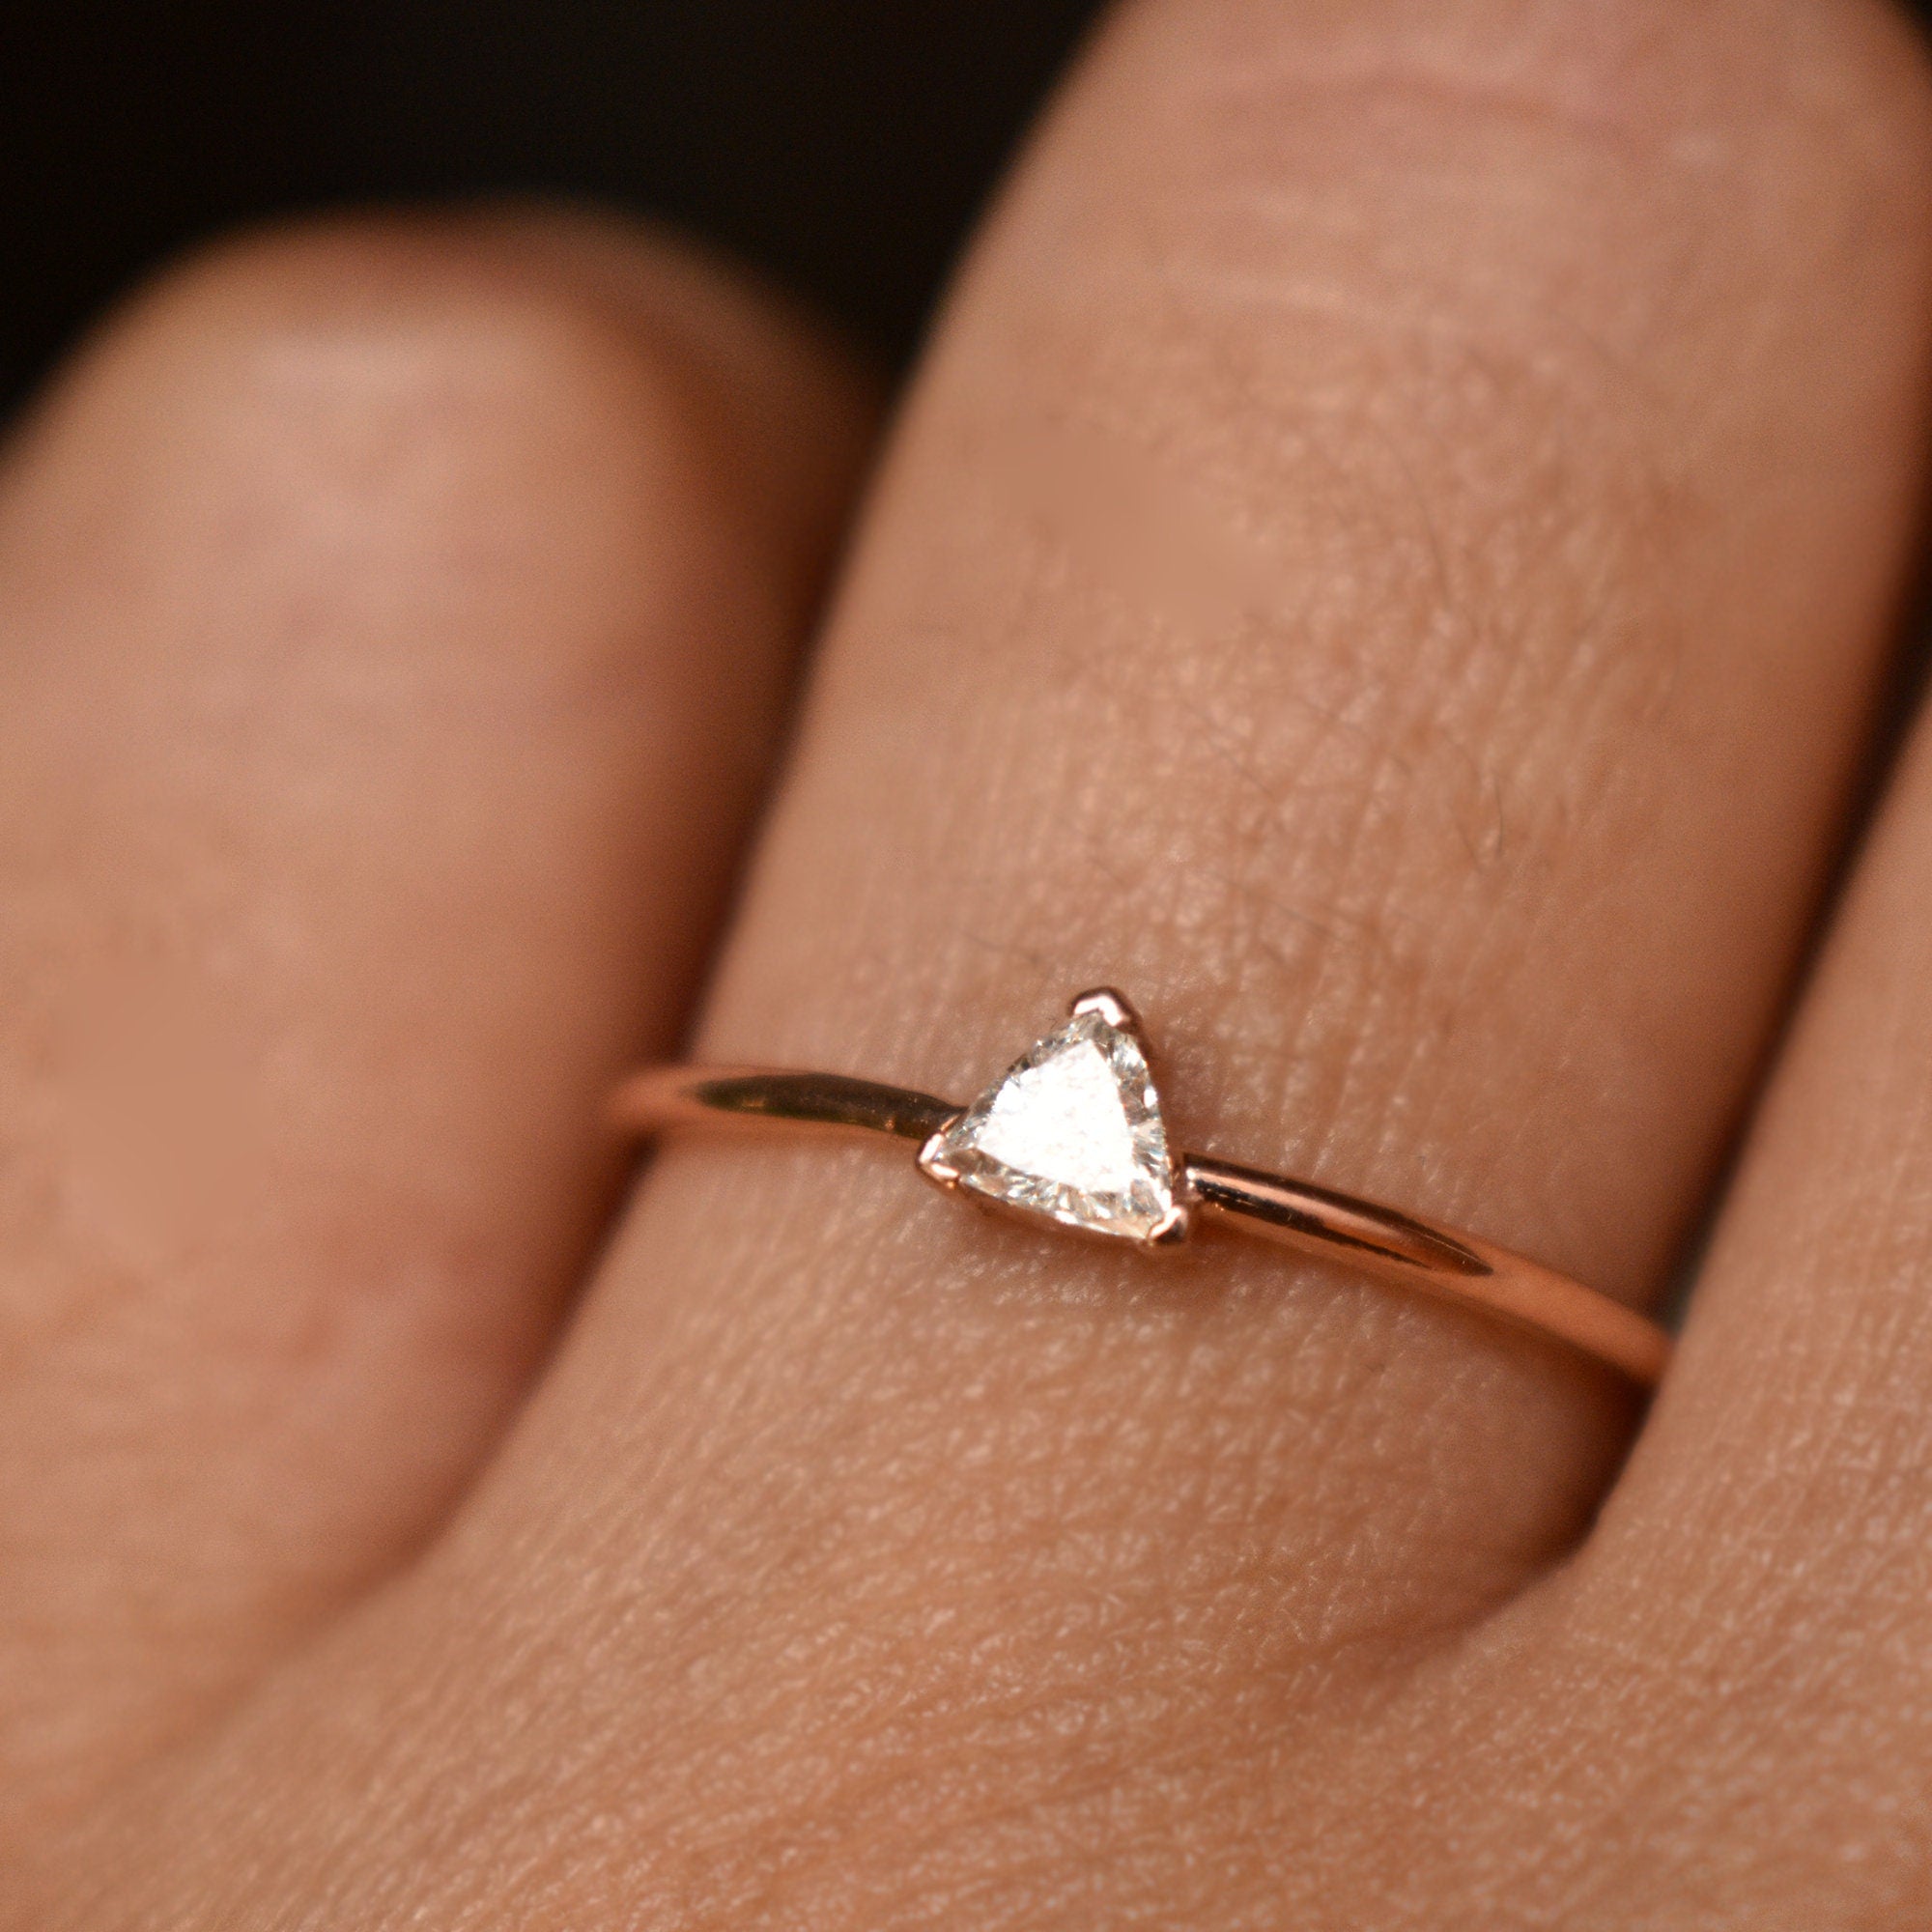 Small Trillion Cut Diamond Engagement Ring, 14k Solid Rose Gold Natural Diamond Ring, Minimal Triangle Diamond Ring, Mountain Proposal Ring